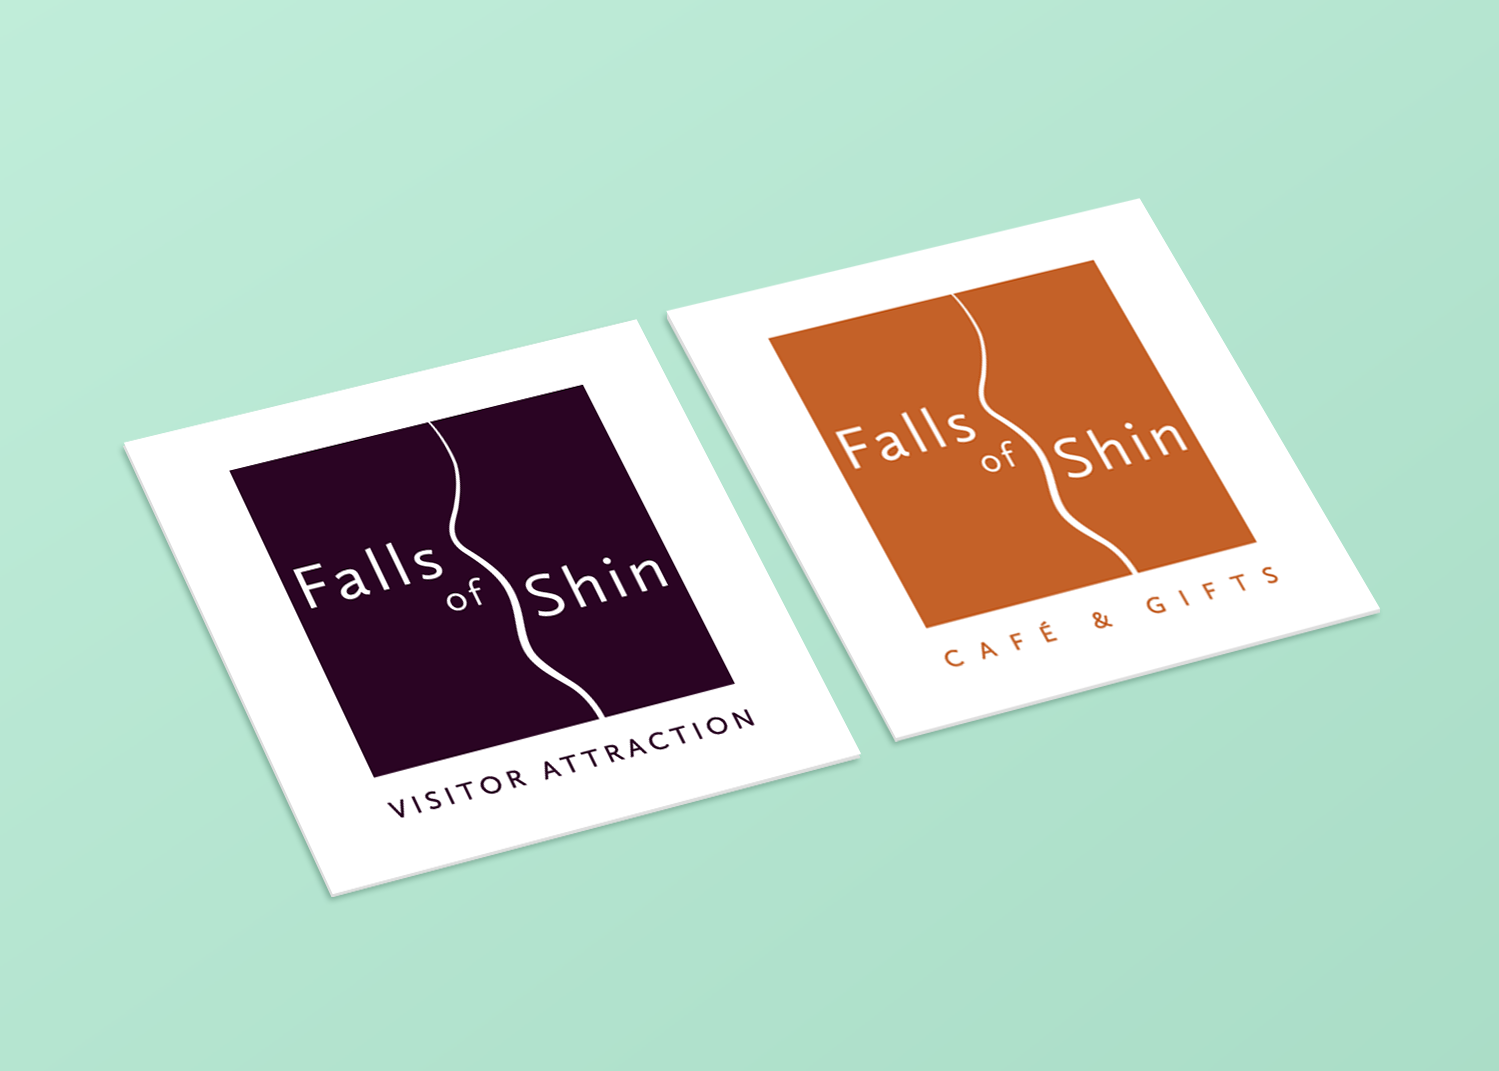 Falls of Shin Visitor Attraction Logo and Falls of Shin Cafe & Gifts Logo